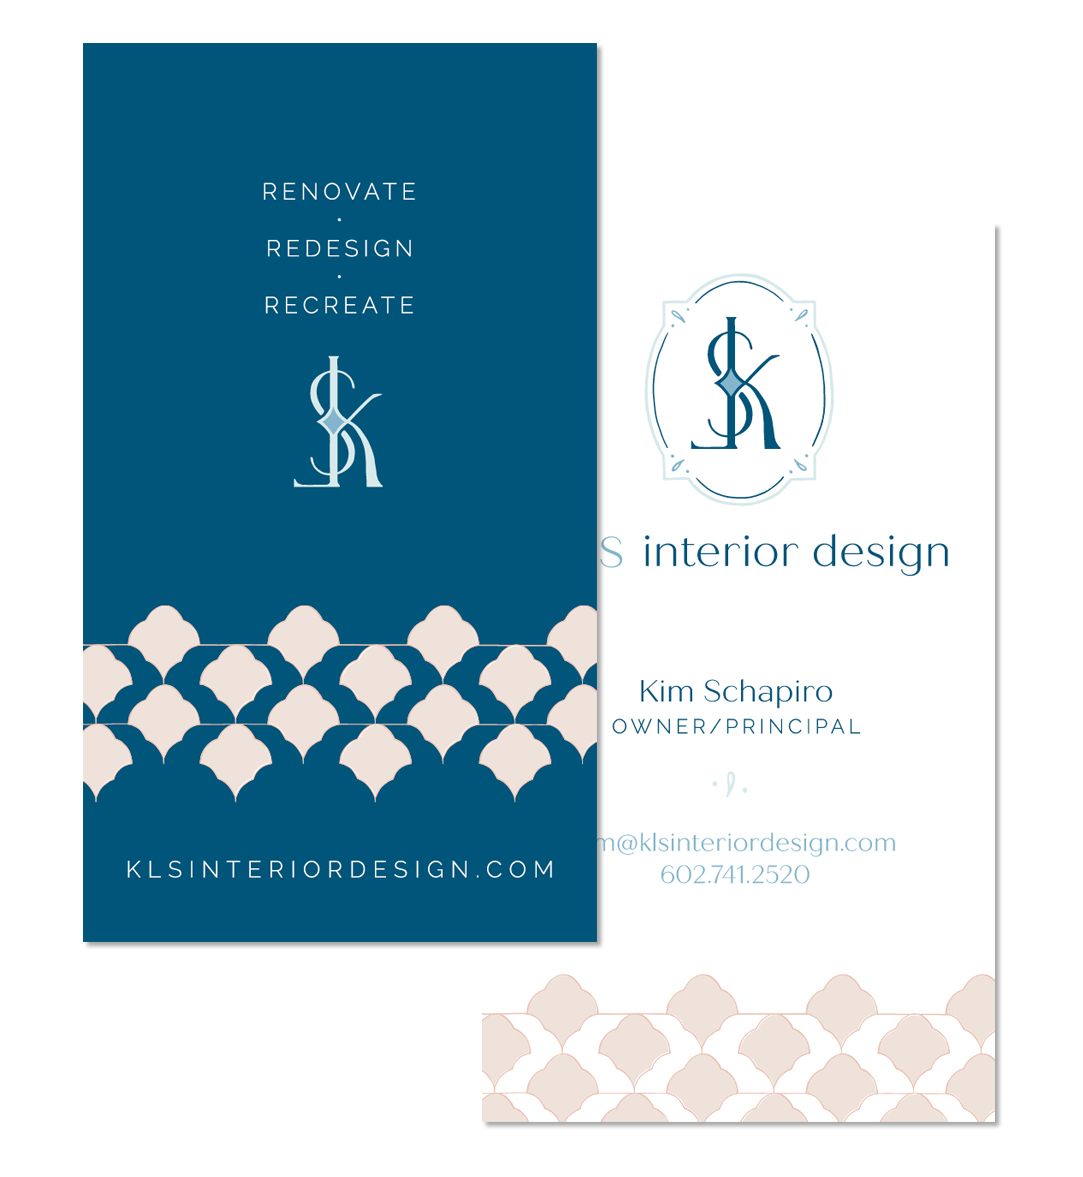 KLS interior design brand design by pop & grey